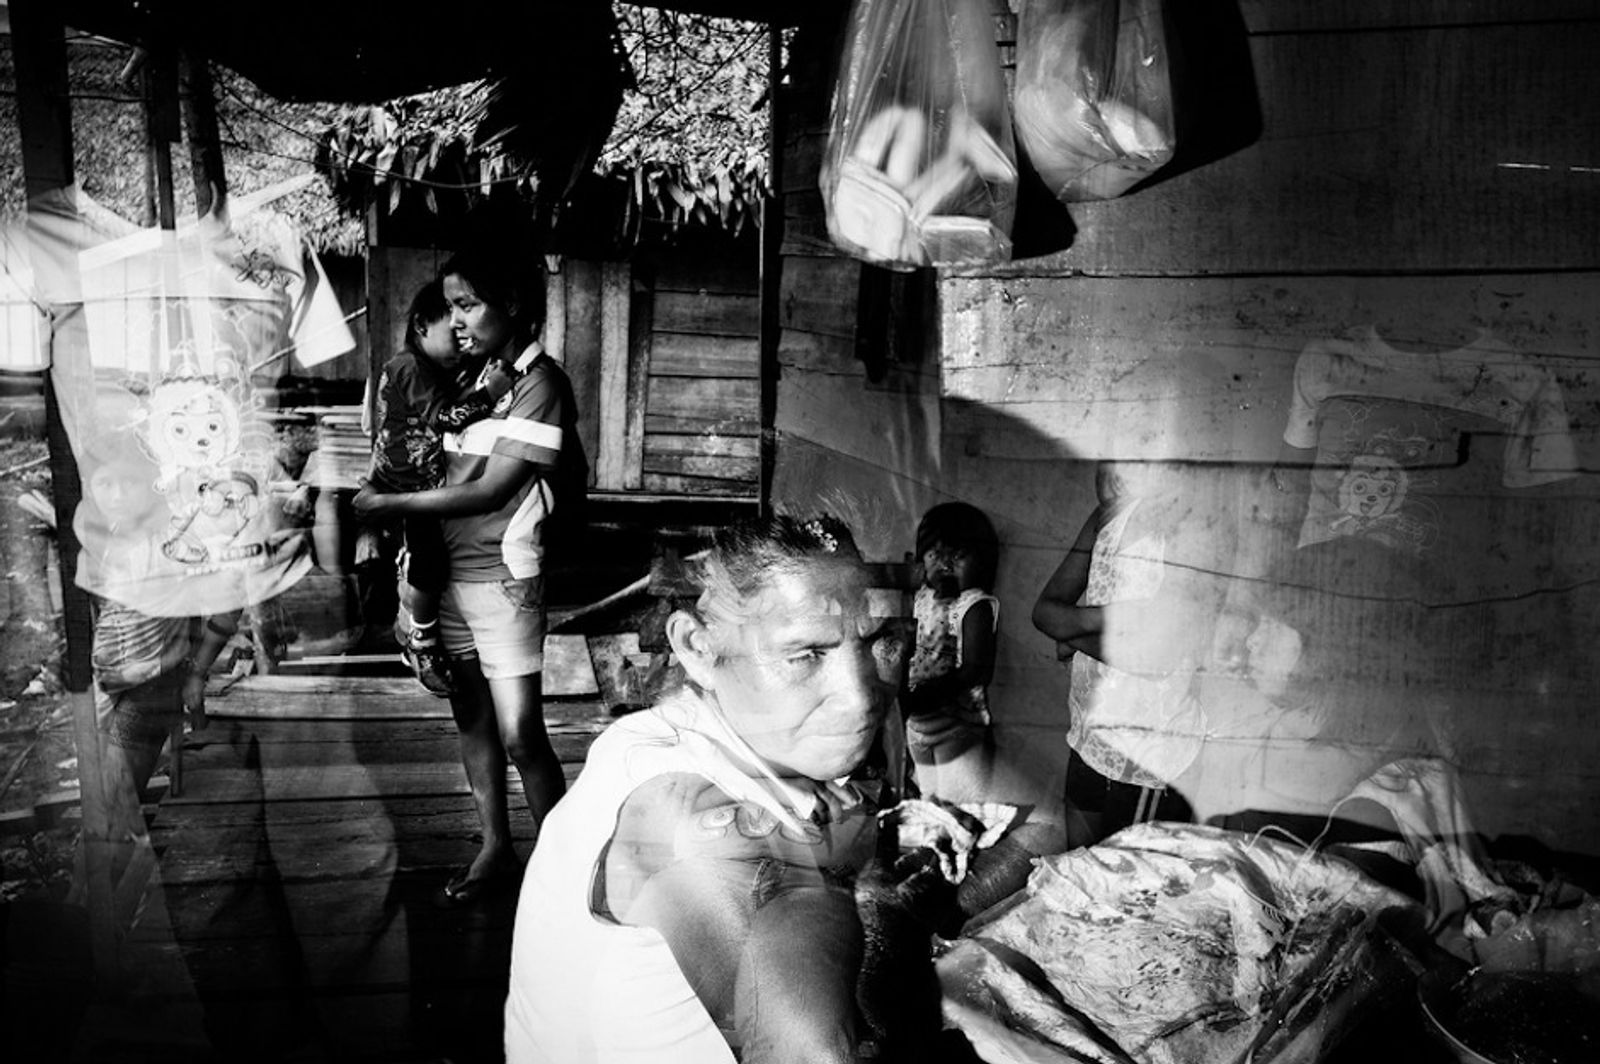 © Nicolas Janowski - Peru, 2012. The Amazons